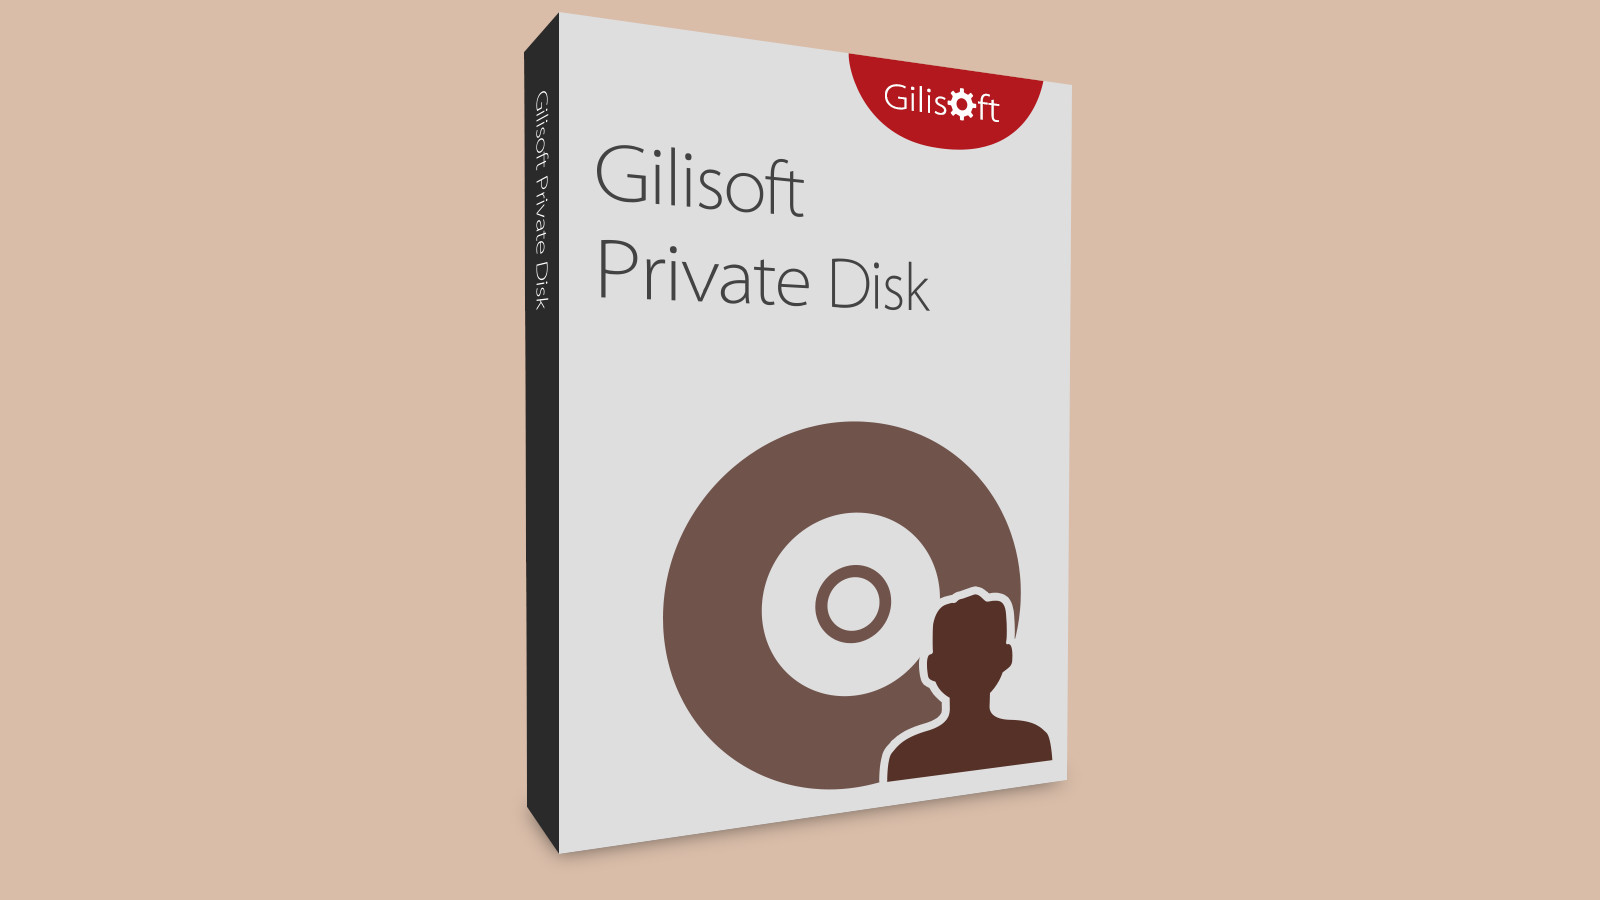 Gilisoft Private Disk CD Key